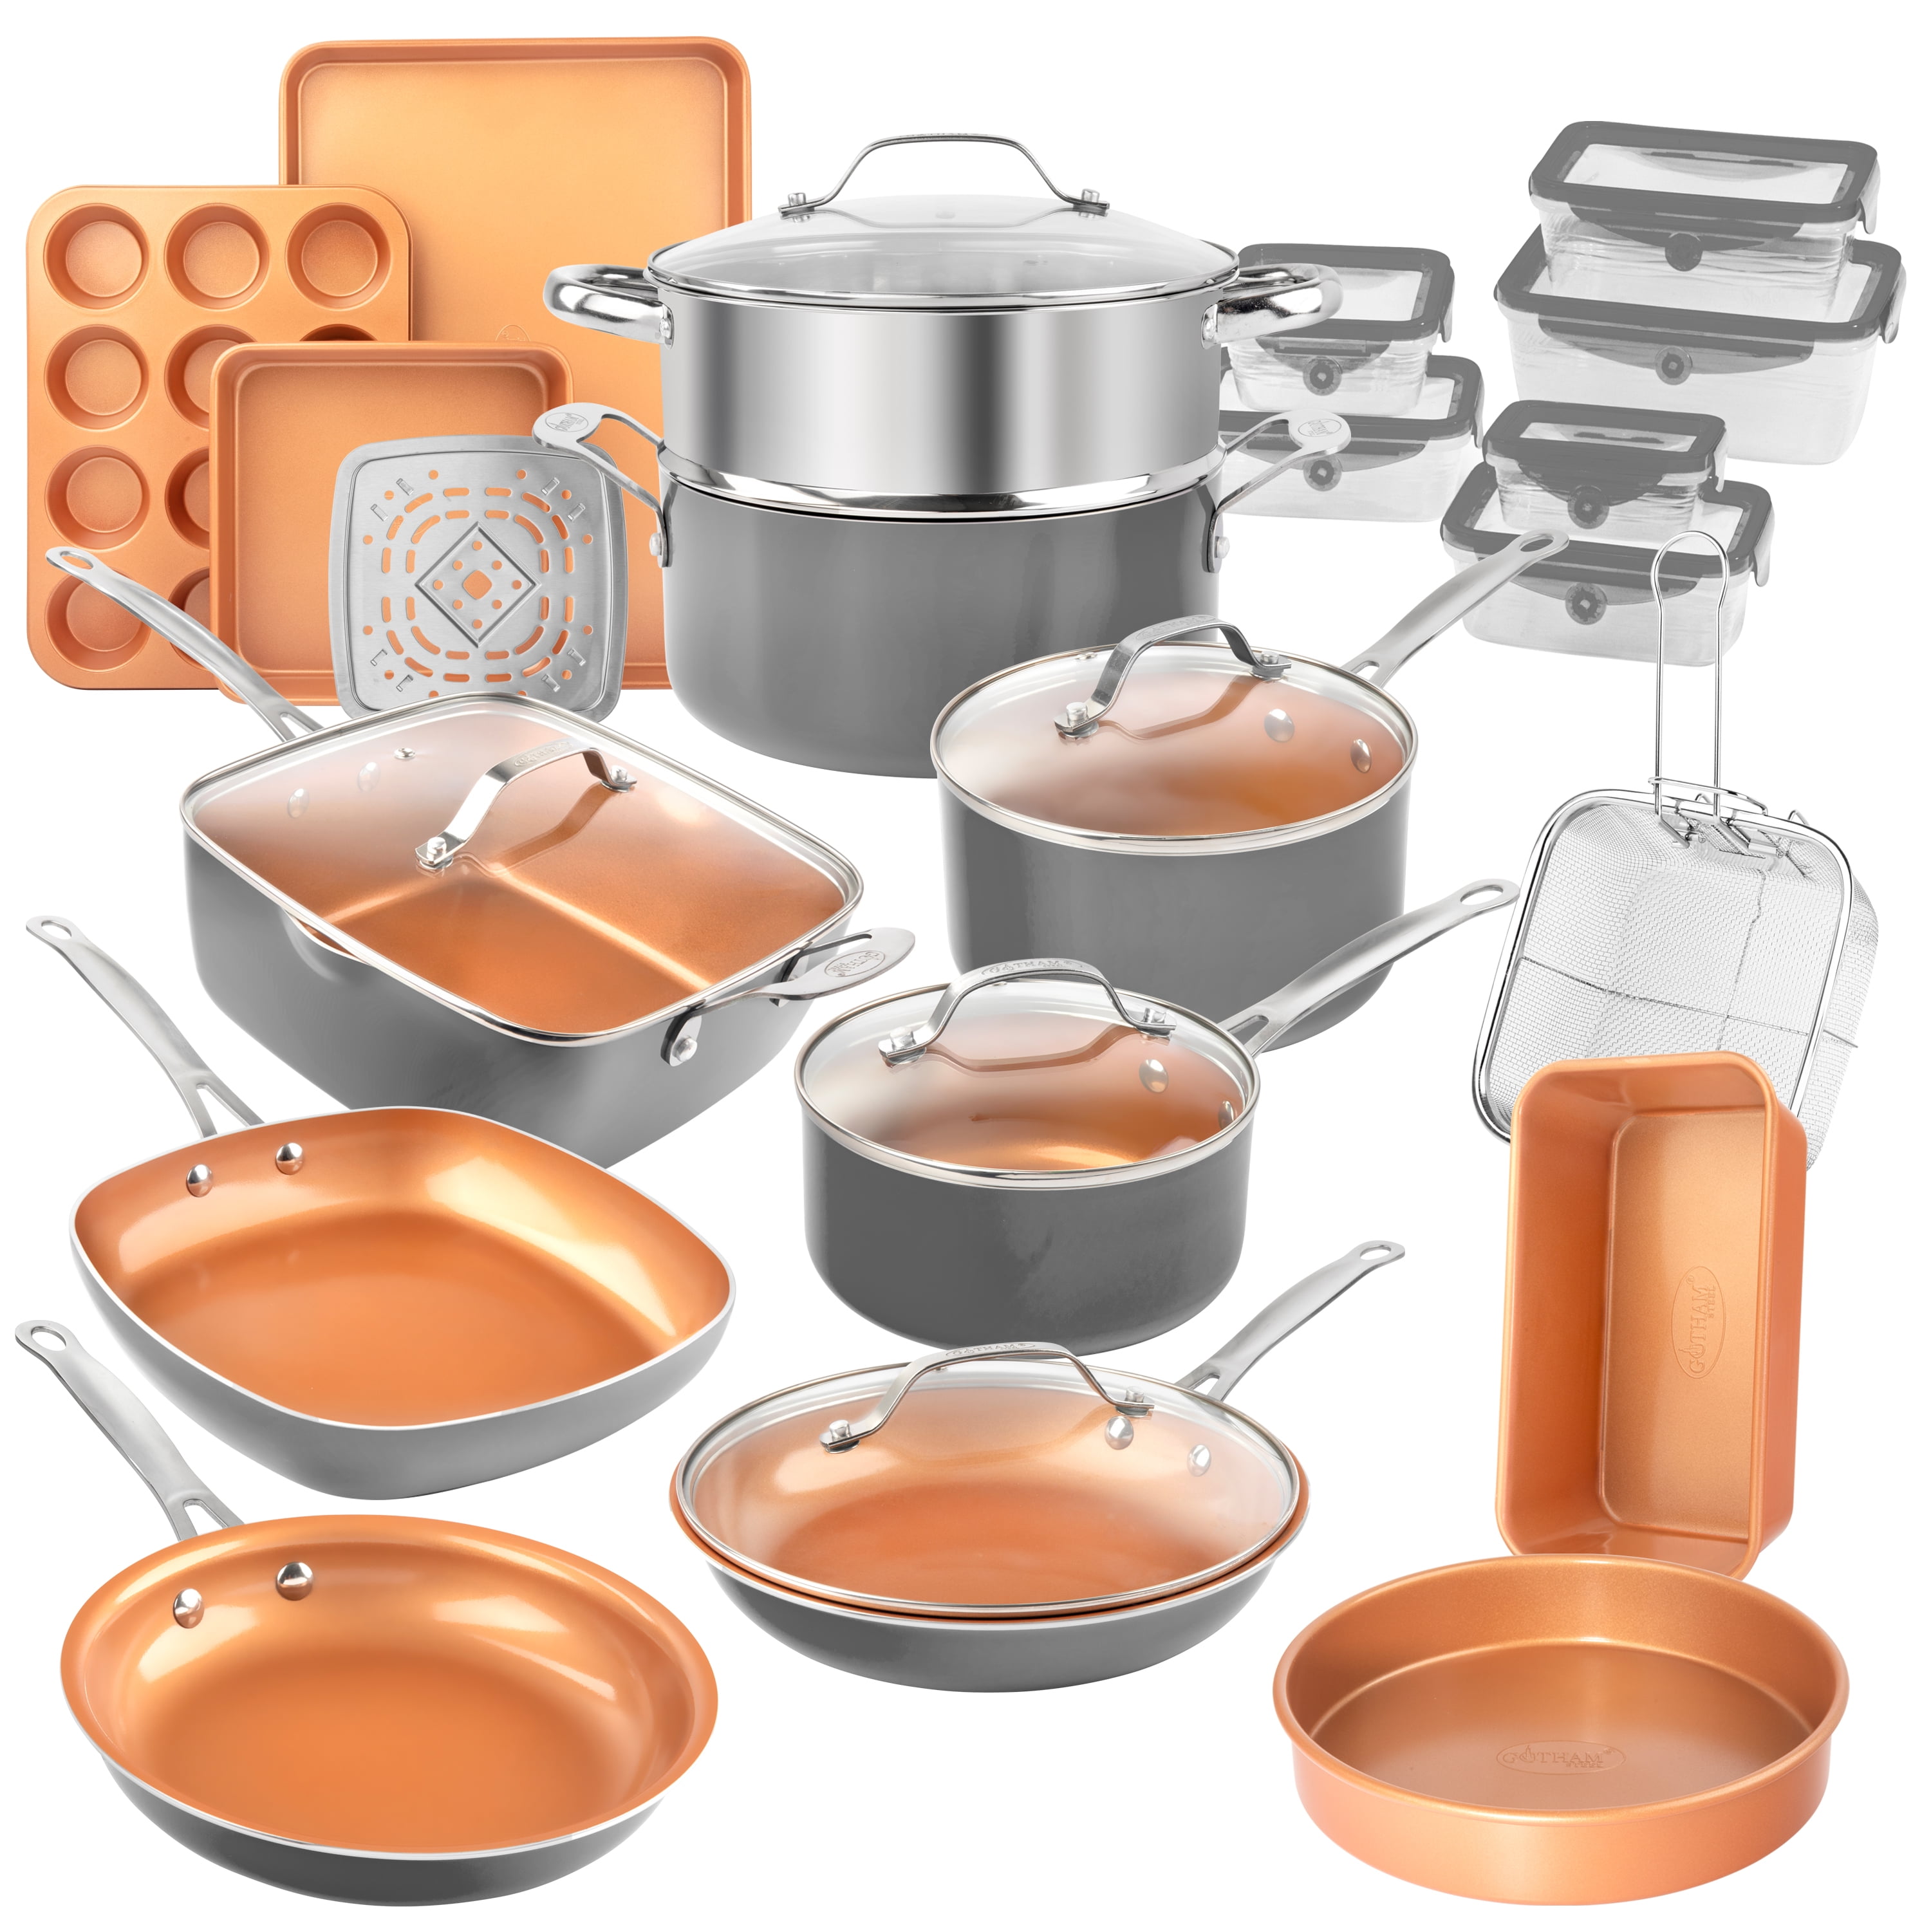 CAROTE Pots and Pans Set Nonstick, cookware sets 11 pcs, kitchen cooking  set cookware w/Frying Pans & Saucepans(PFOS, PFOA Free) - AliExpress